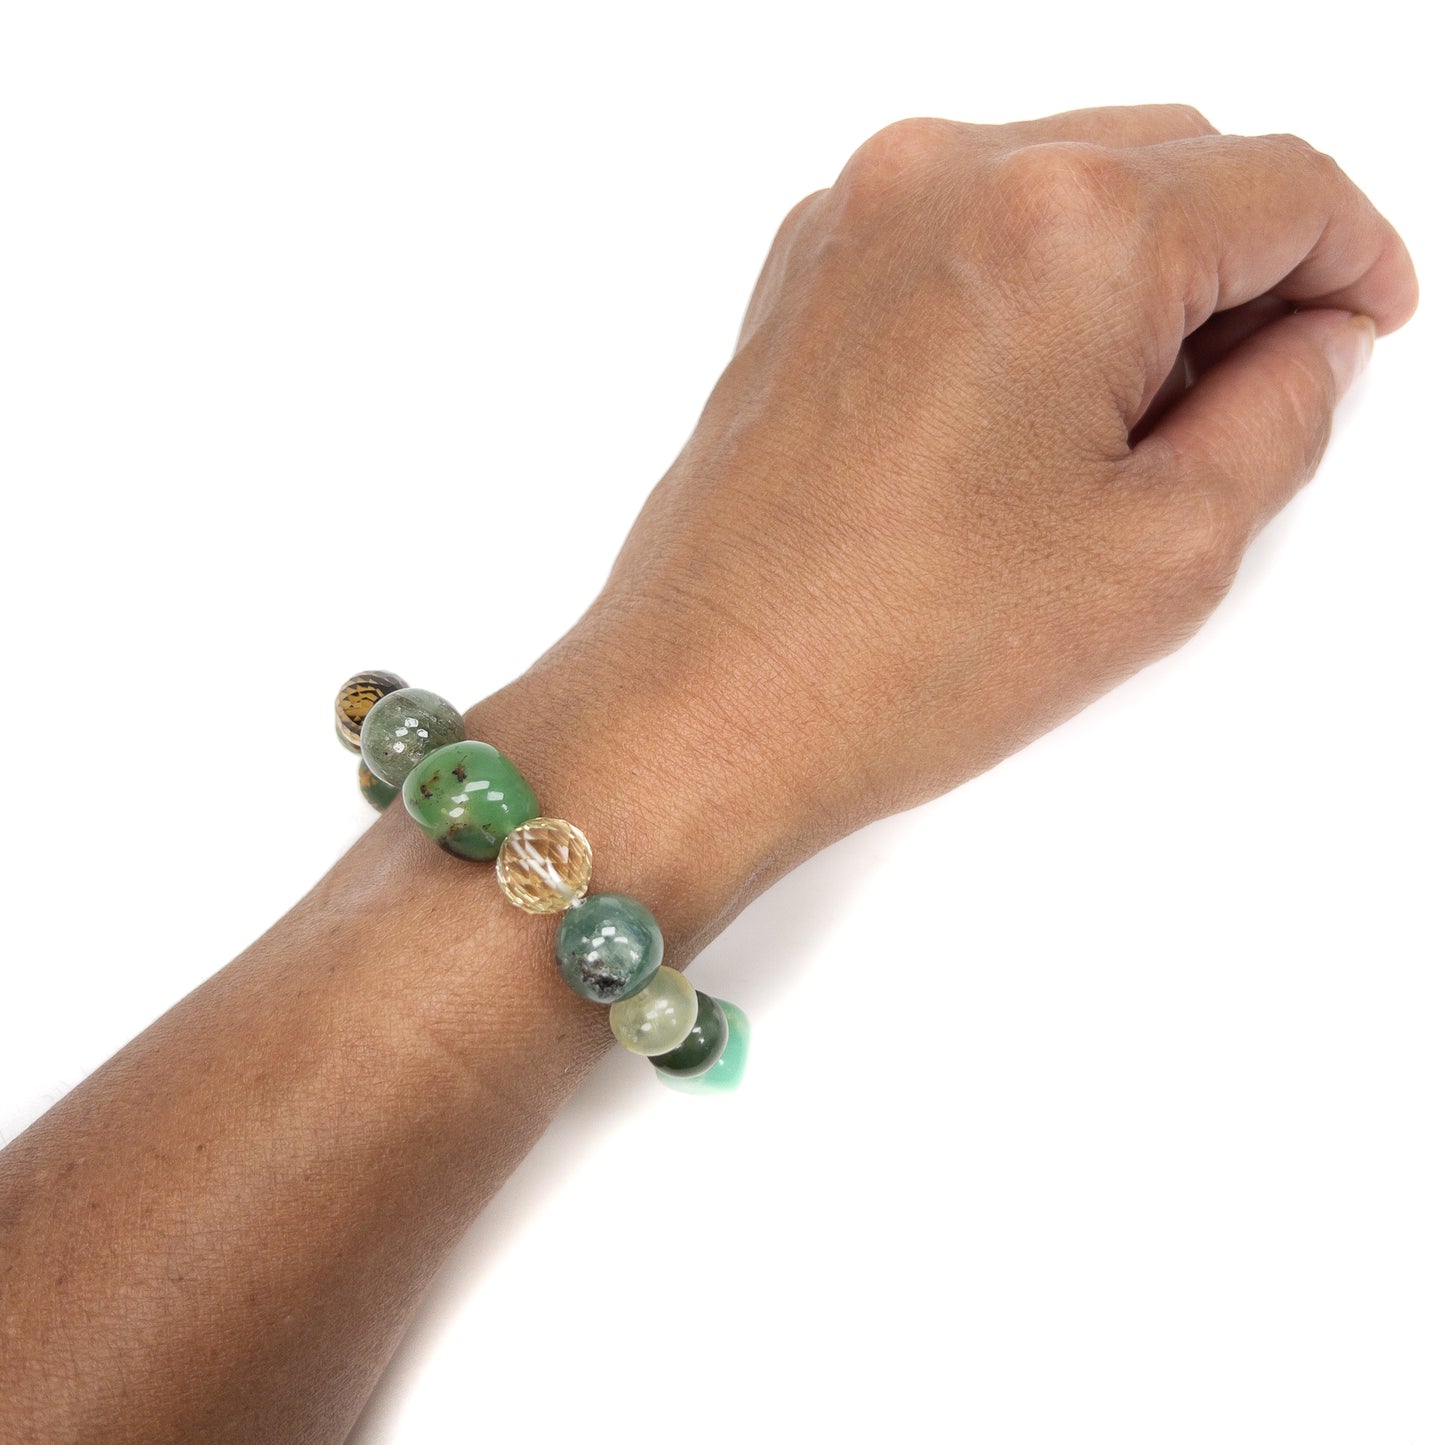 Green Goddess Stretchy Bracelet - Kit or Finished Bracelet